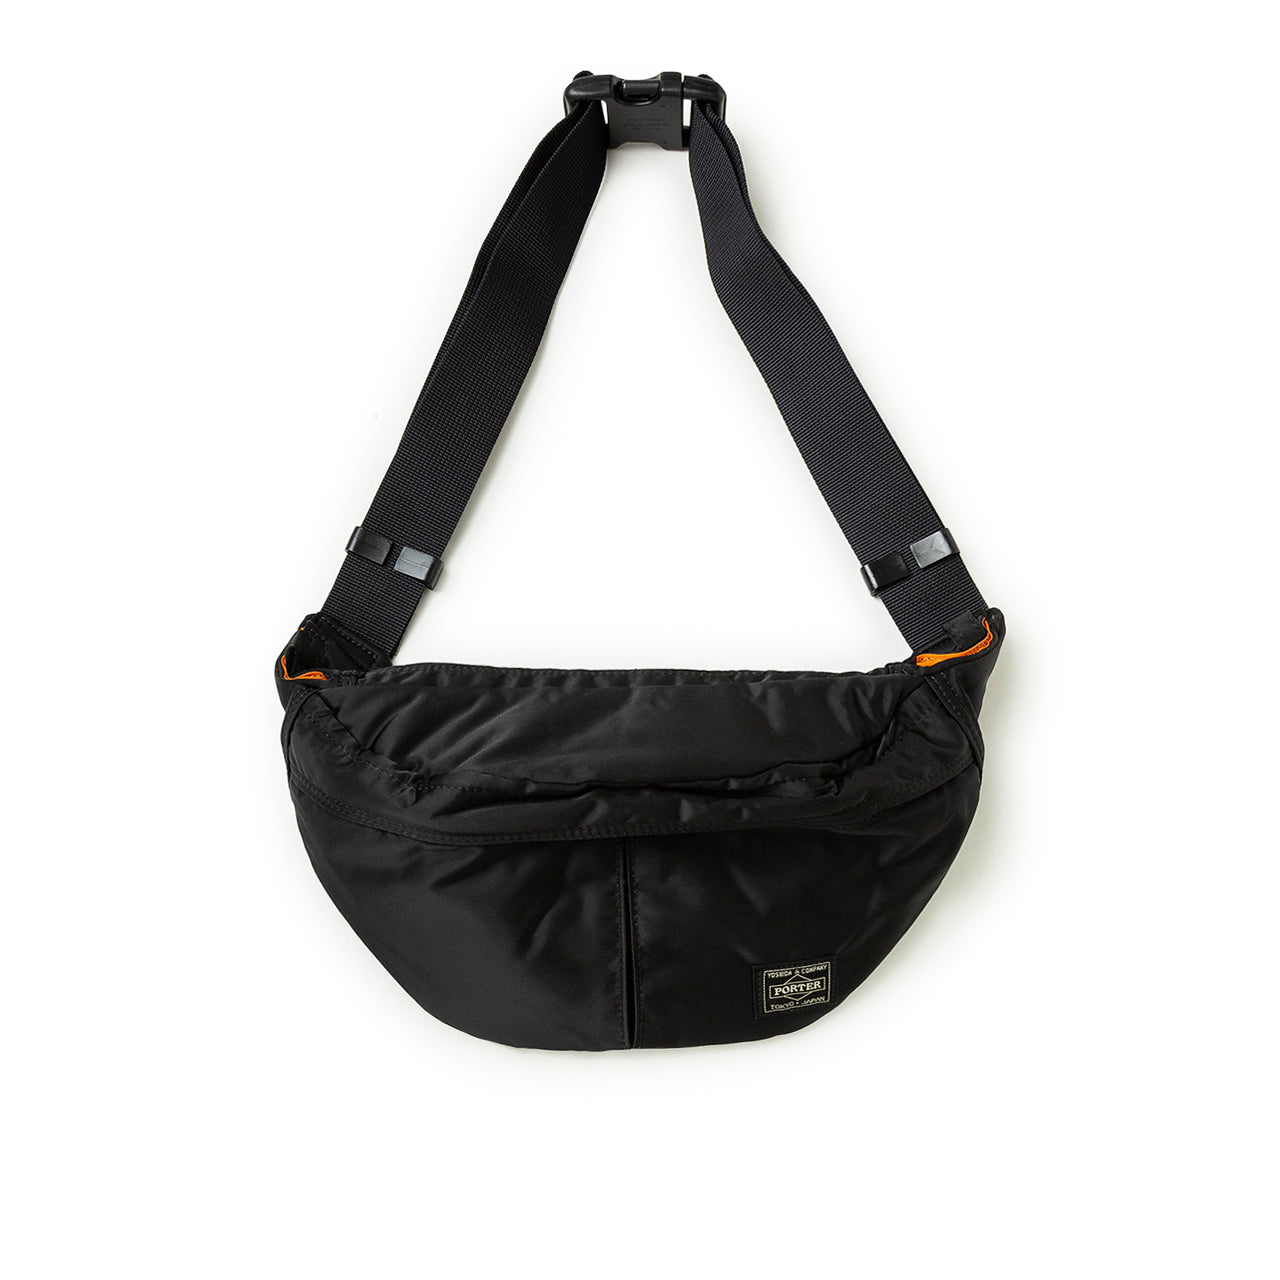 porter by yoshida tanker waist bag s (black) - 622-76629-10 - a